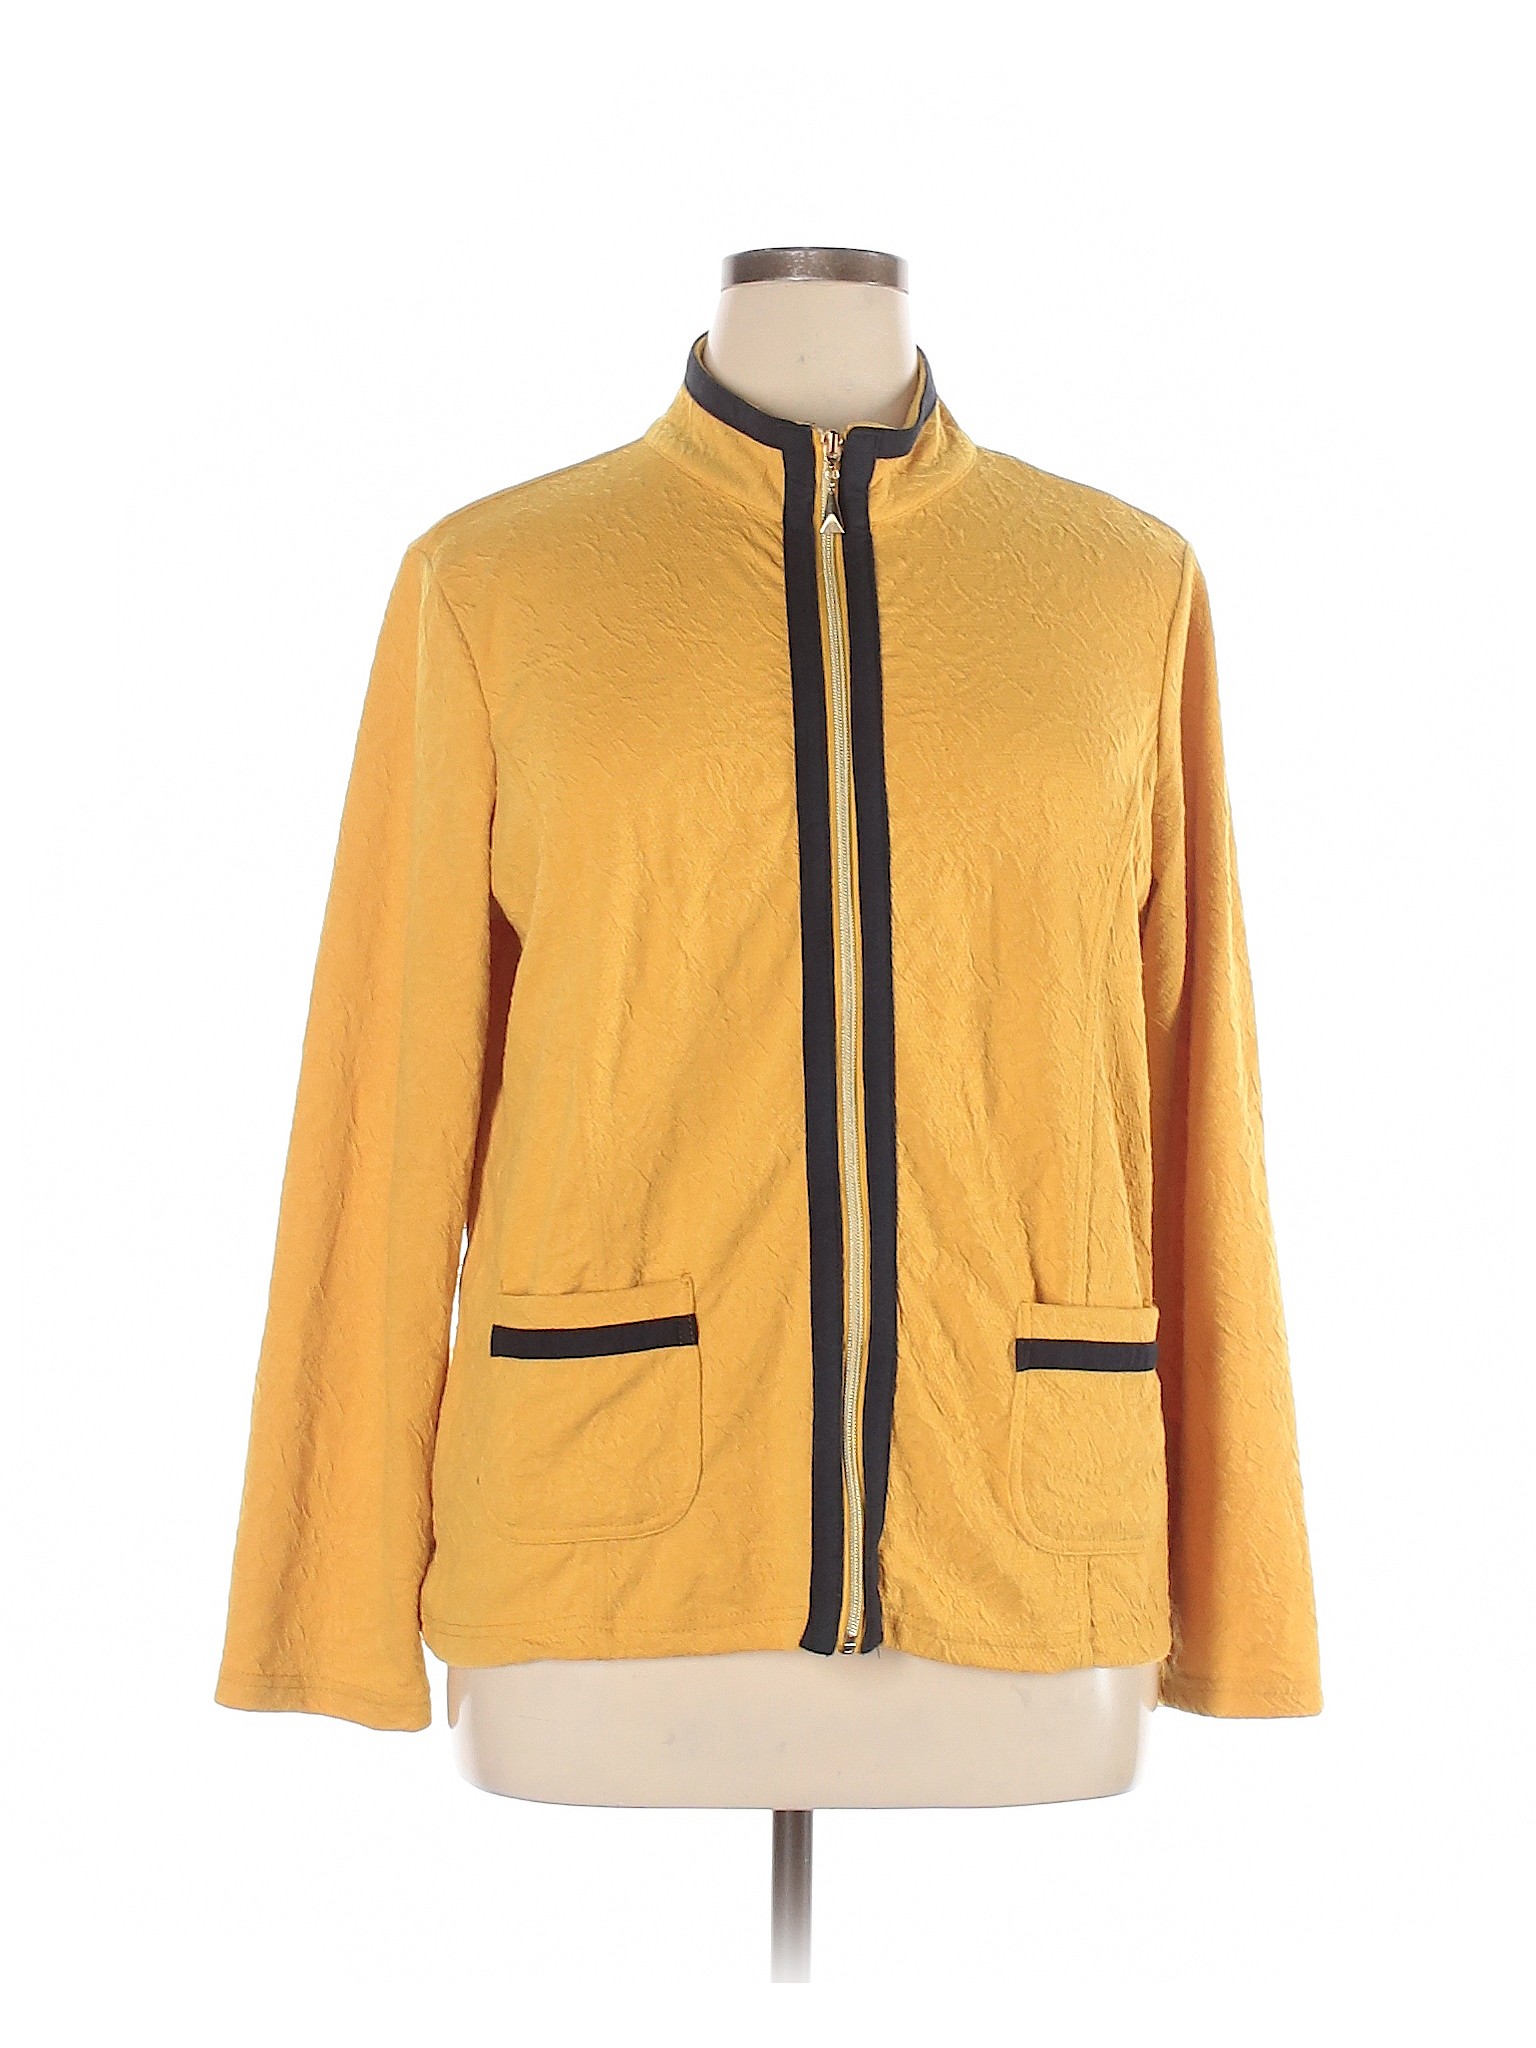 Onque Casuals Women Yellow Jacket XL | eBay